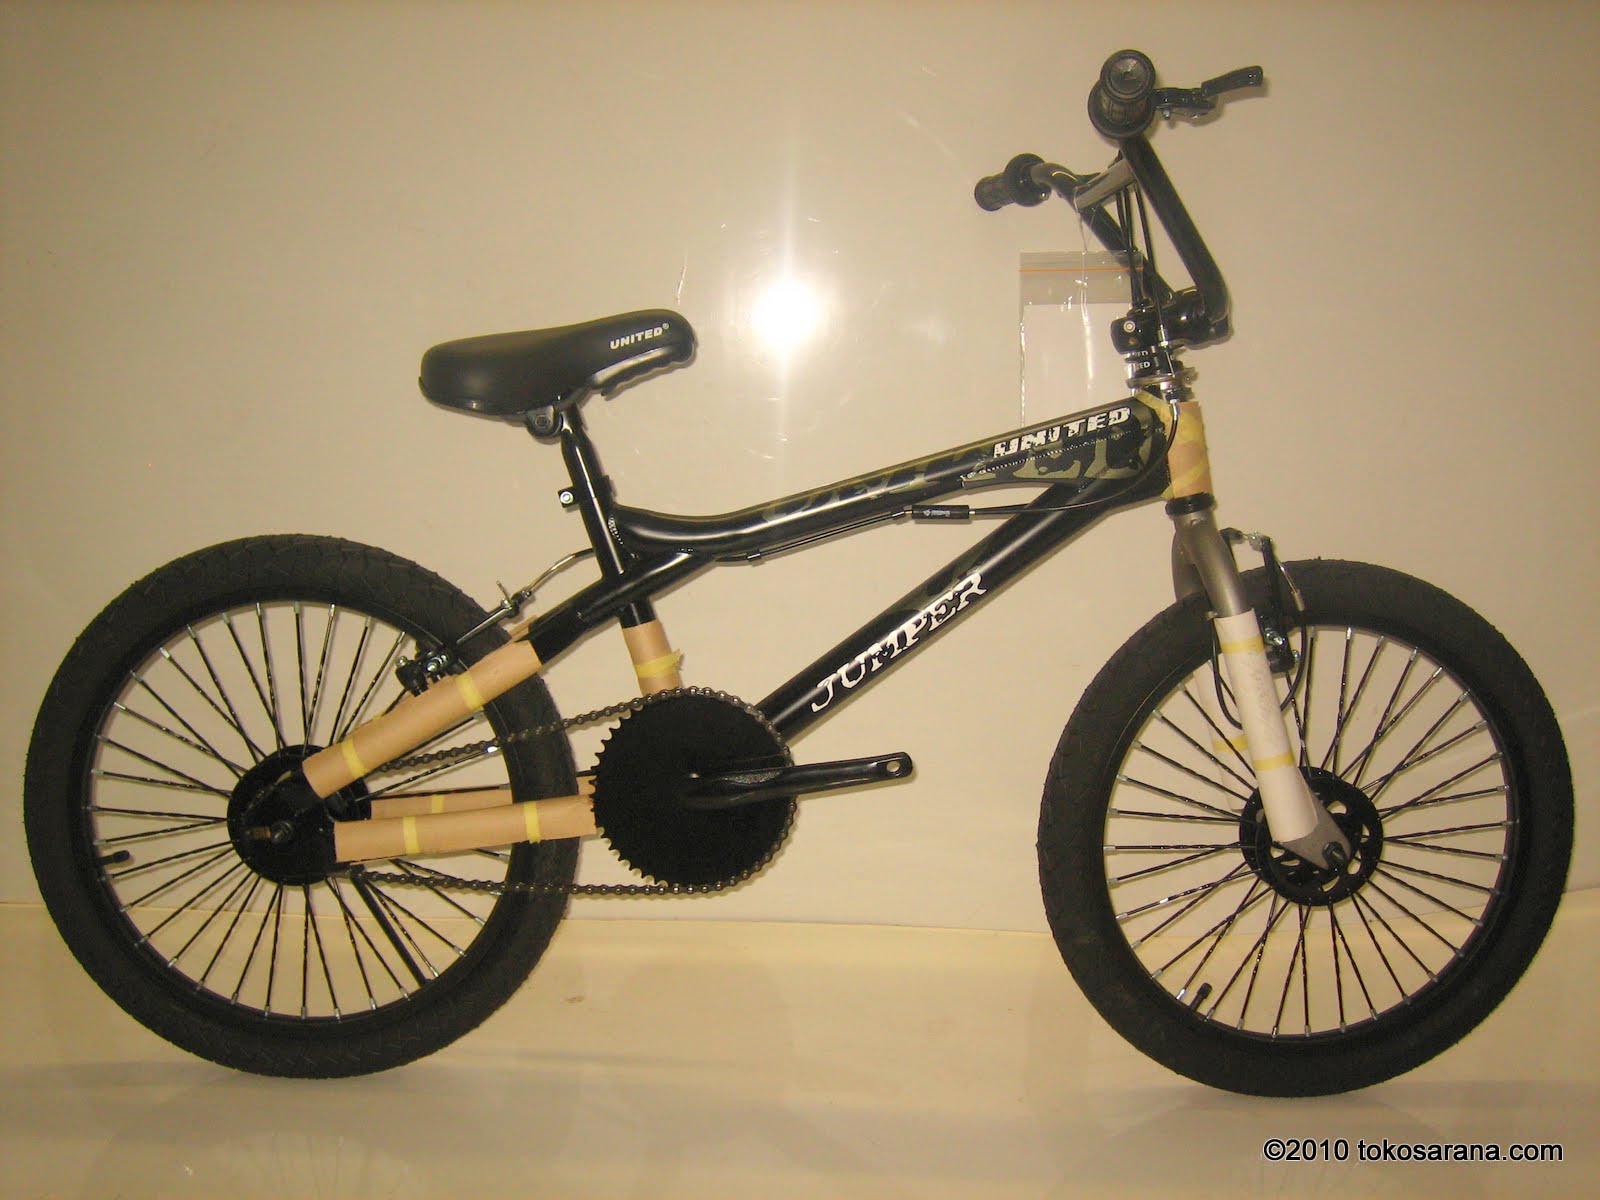 wallpaper sepeda bmx,vehicle,bicycle part,bicycle,bicycle wheel,freestyle bmx